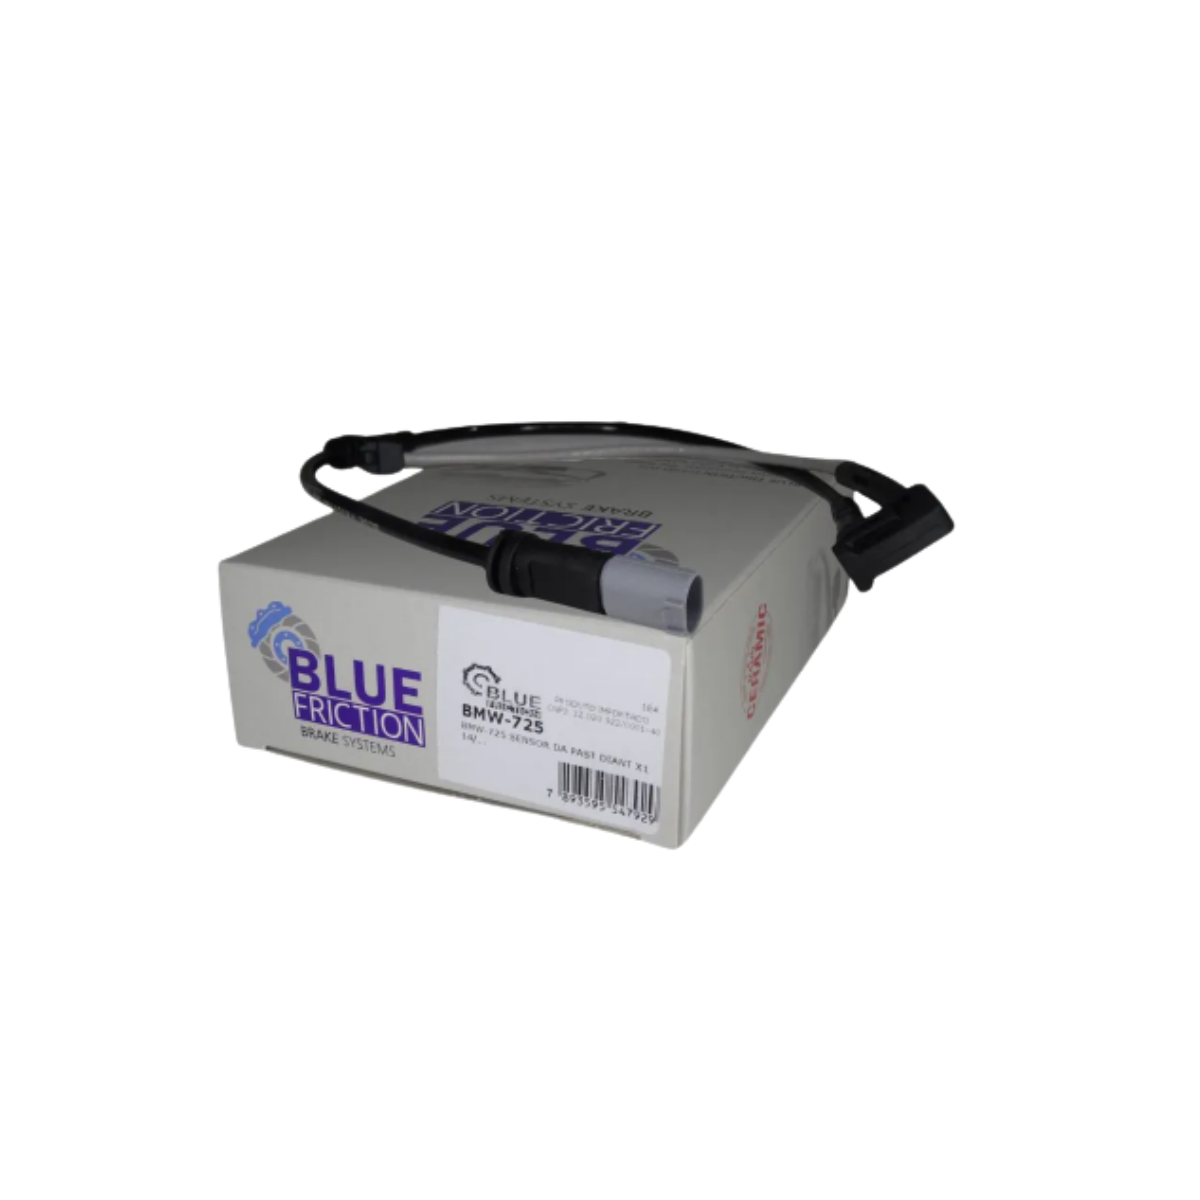 Sensor Desgaste Pastilha Mini Cooper Se A Partir De 2019 Dianteira Lado Esquerdo Blue Friction Bmw-725m New